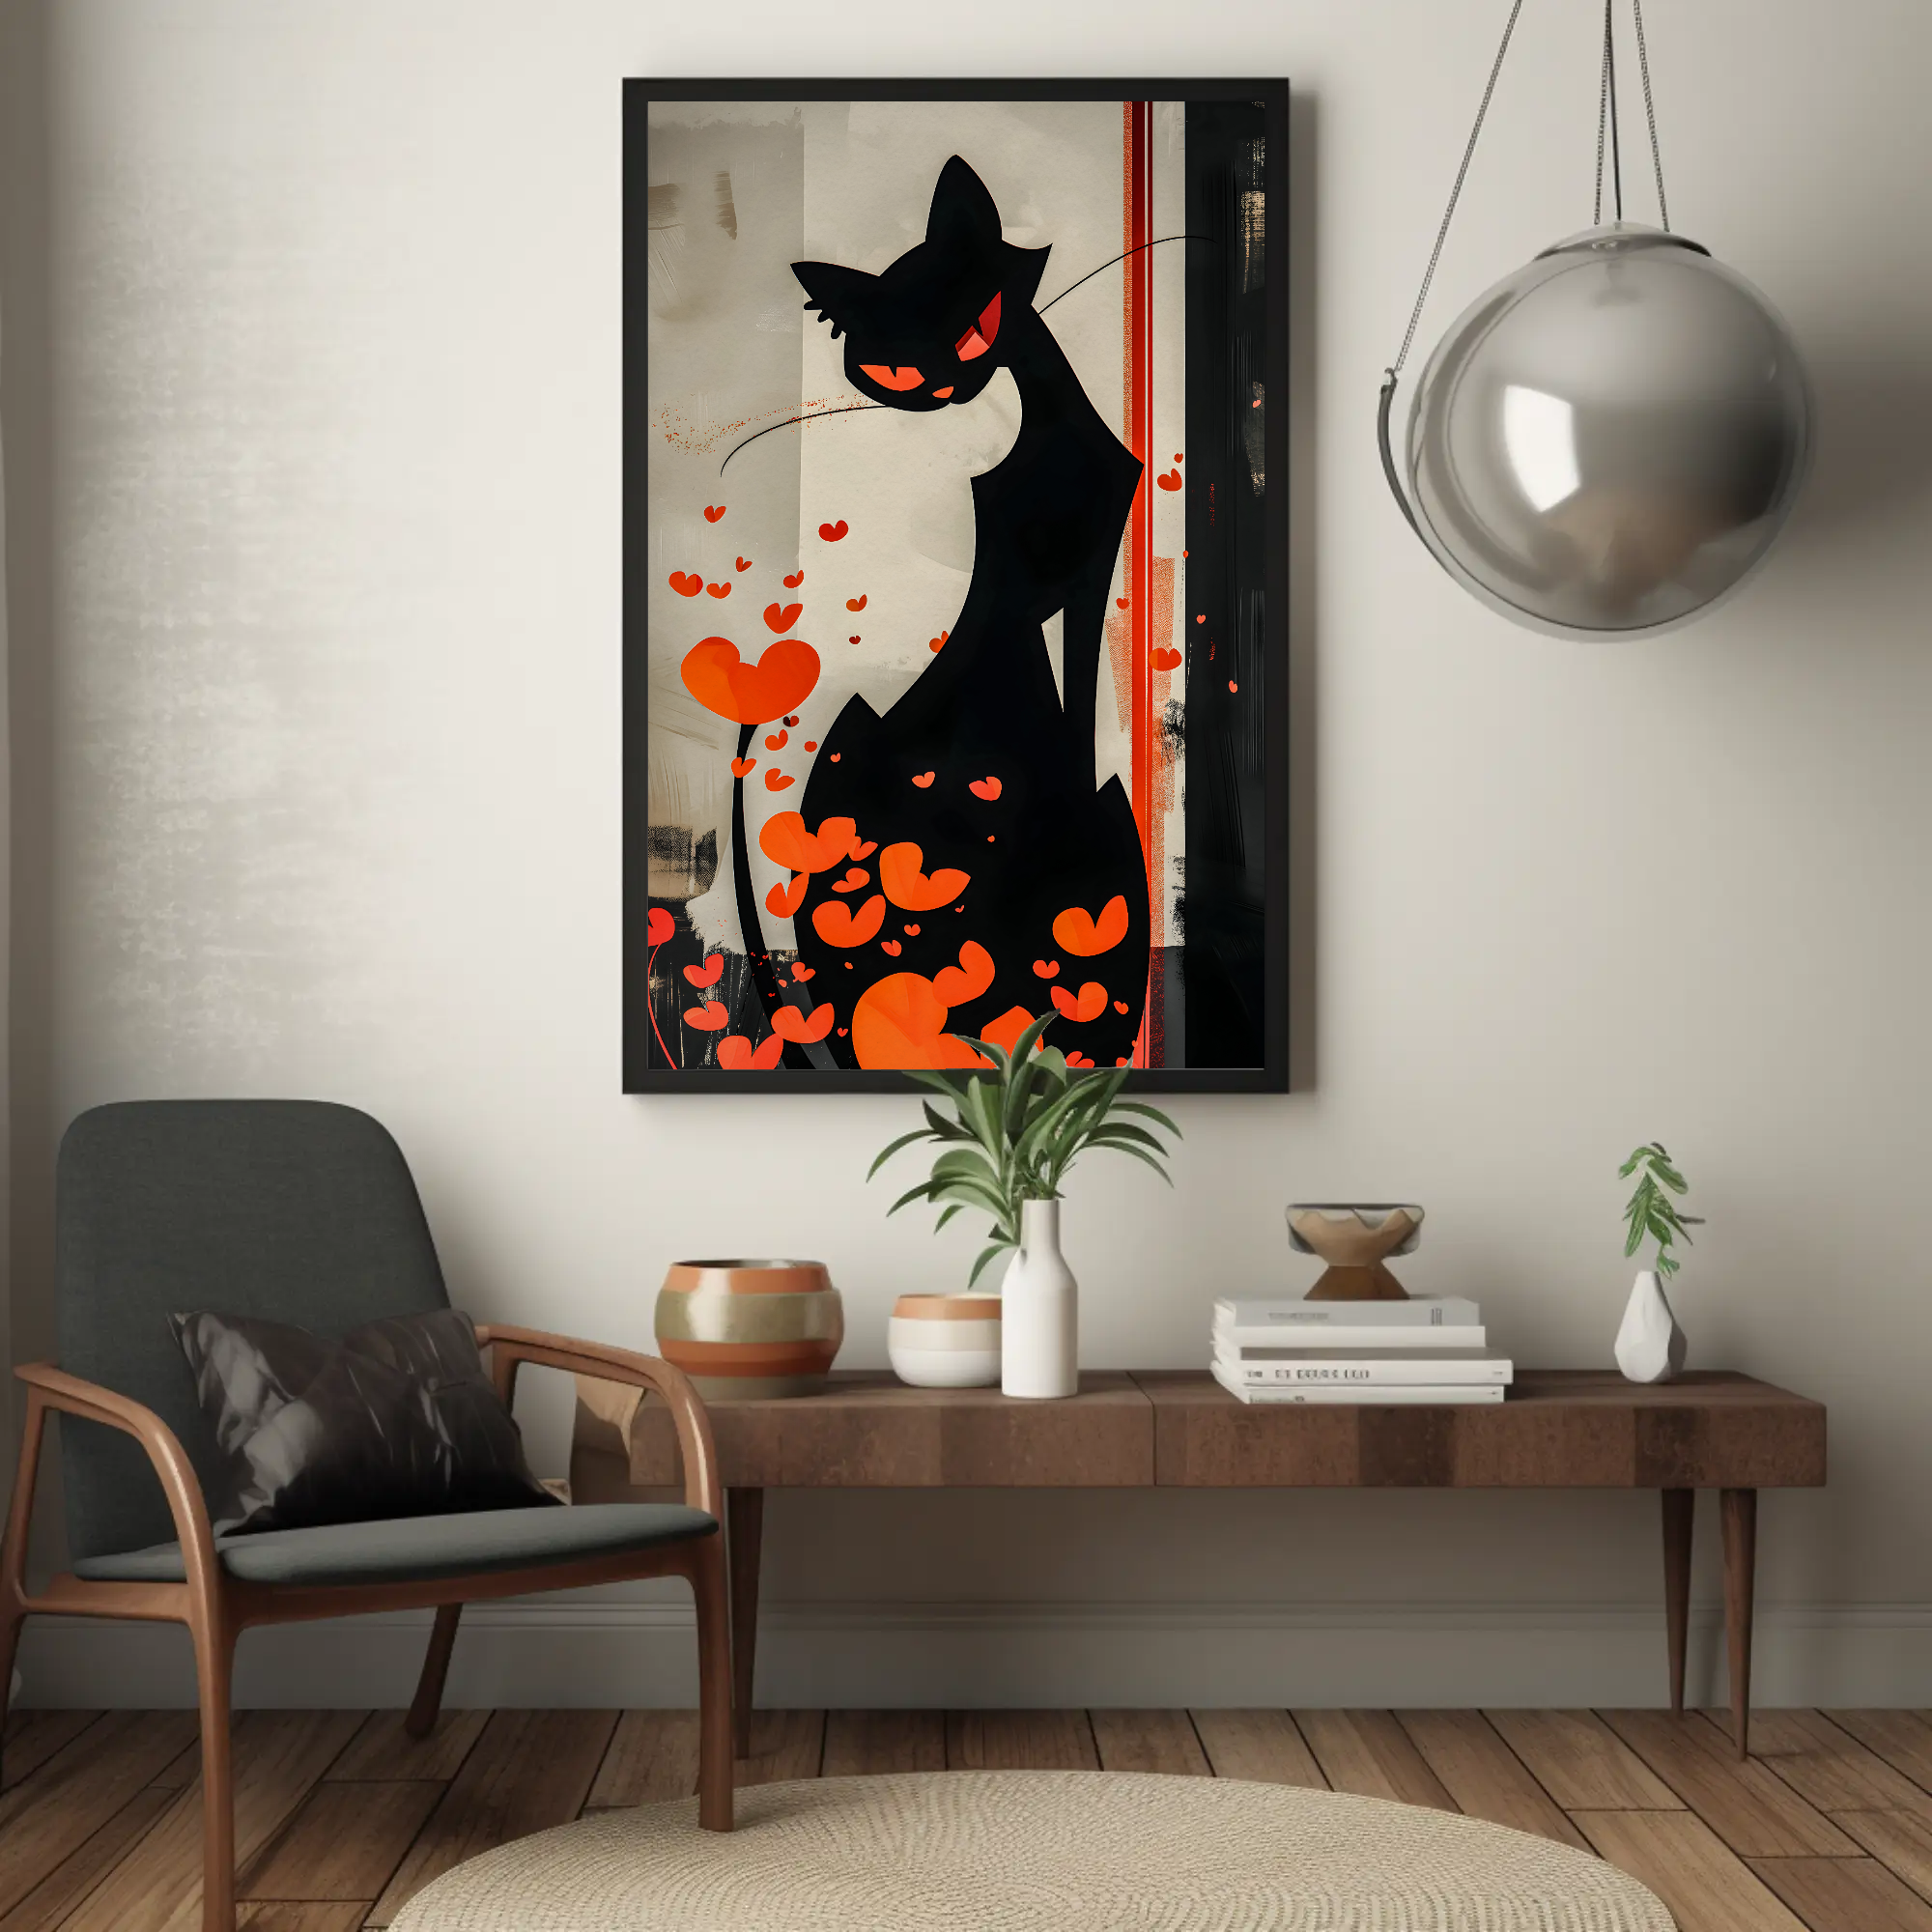 Heartthrob Cat Art: Contemporary Black Cat Painting